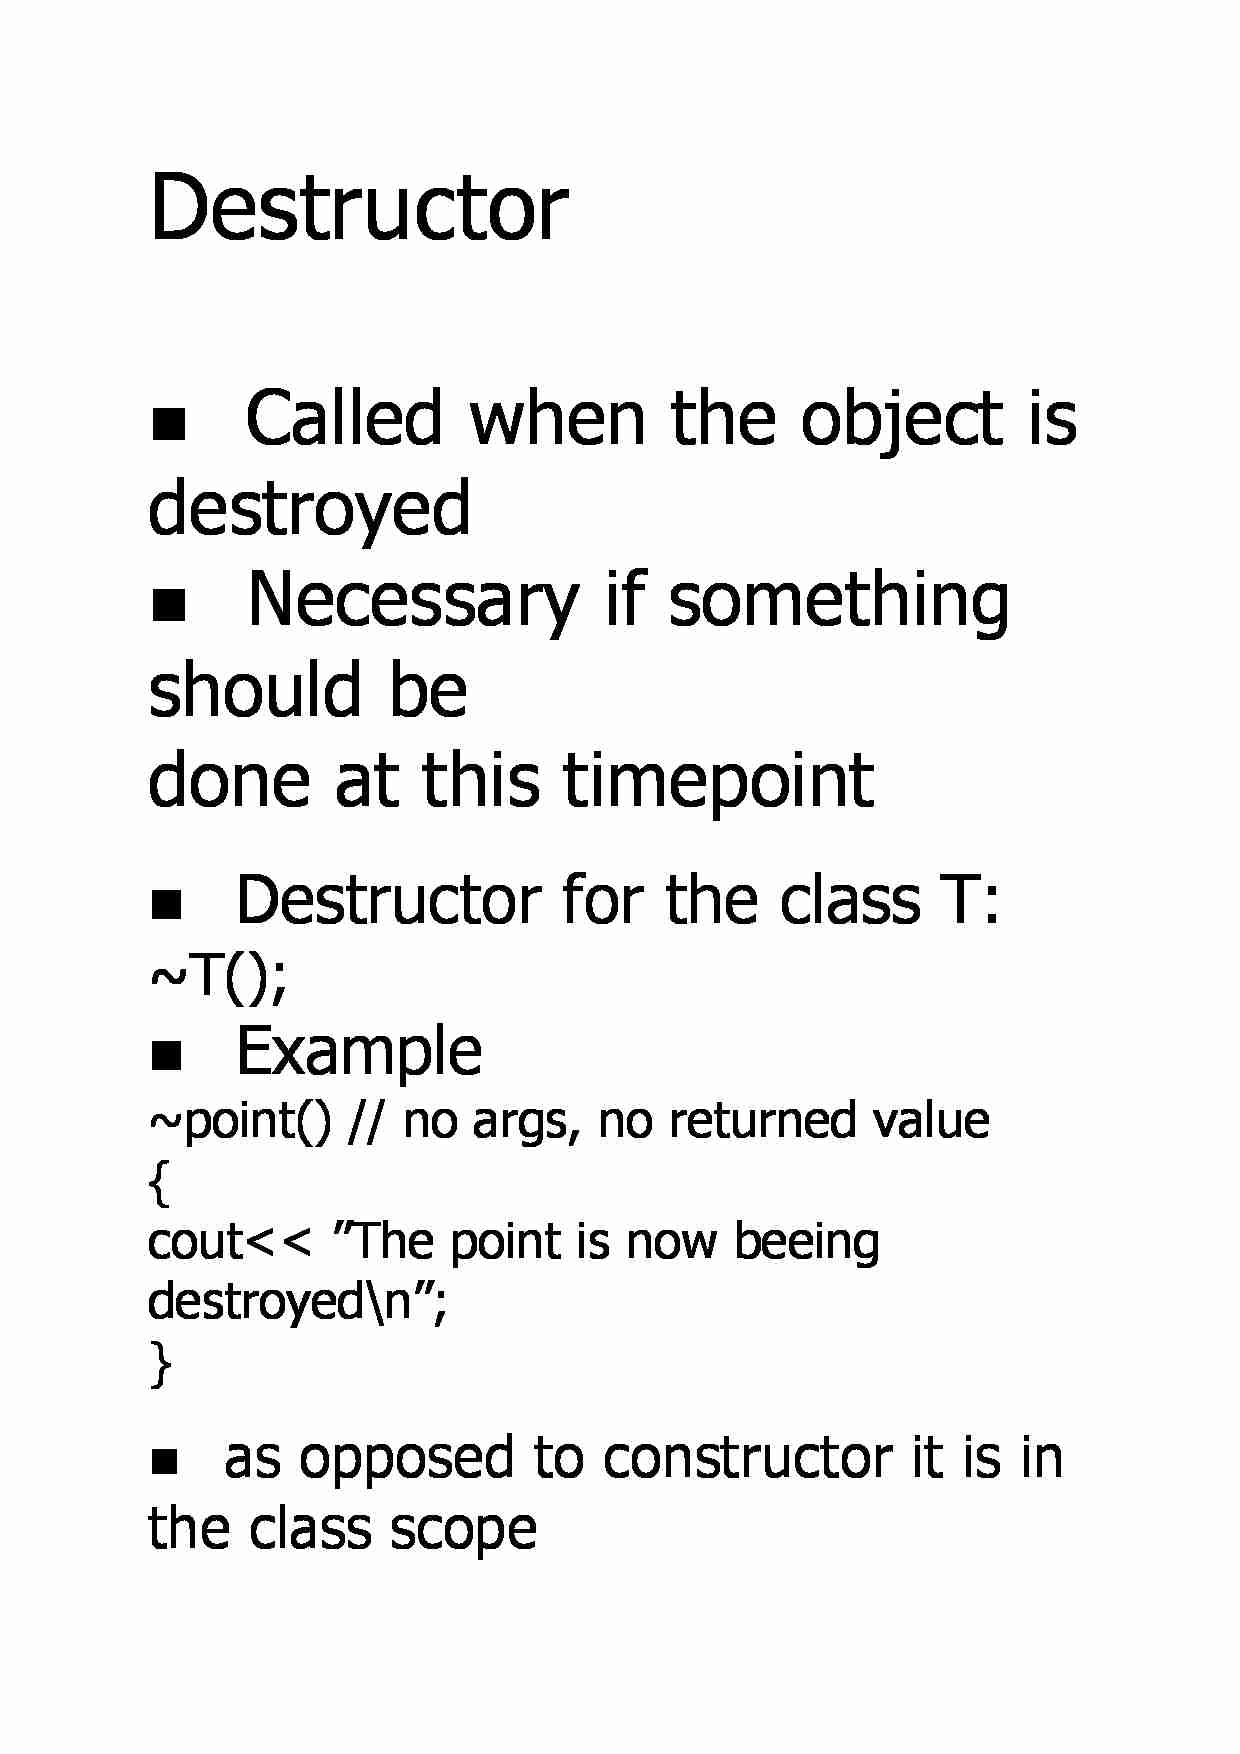 Destructor - Example - strona 1